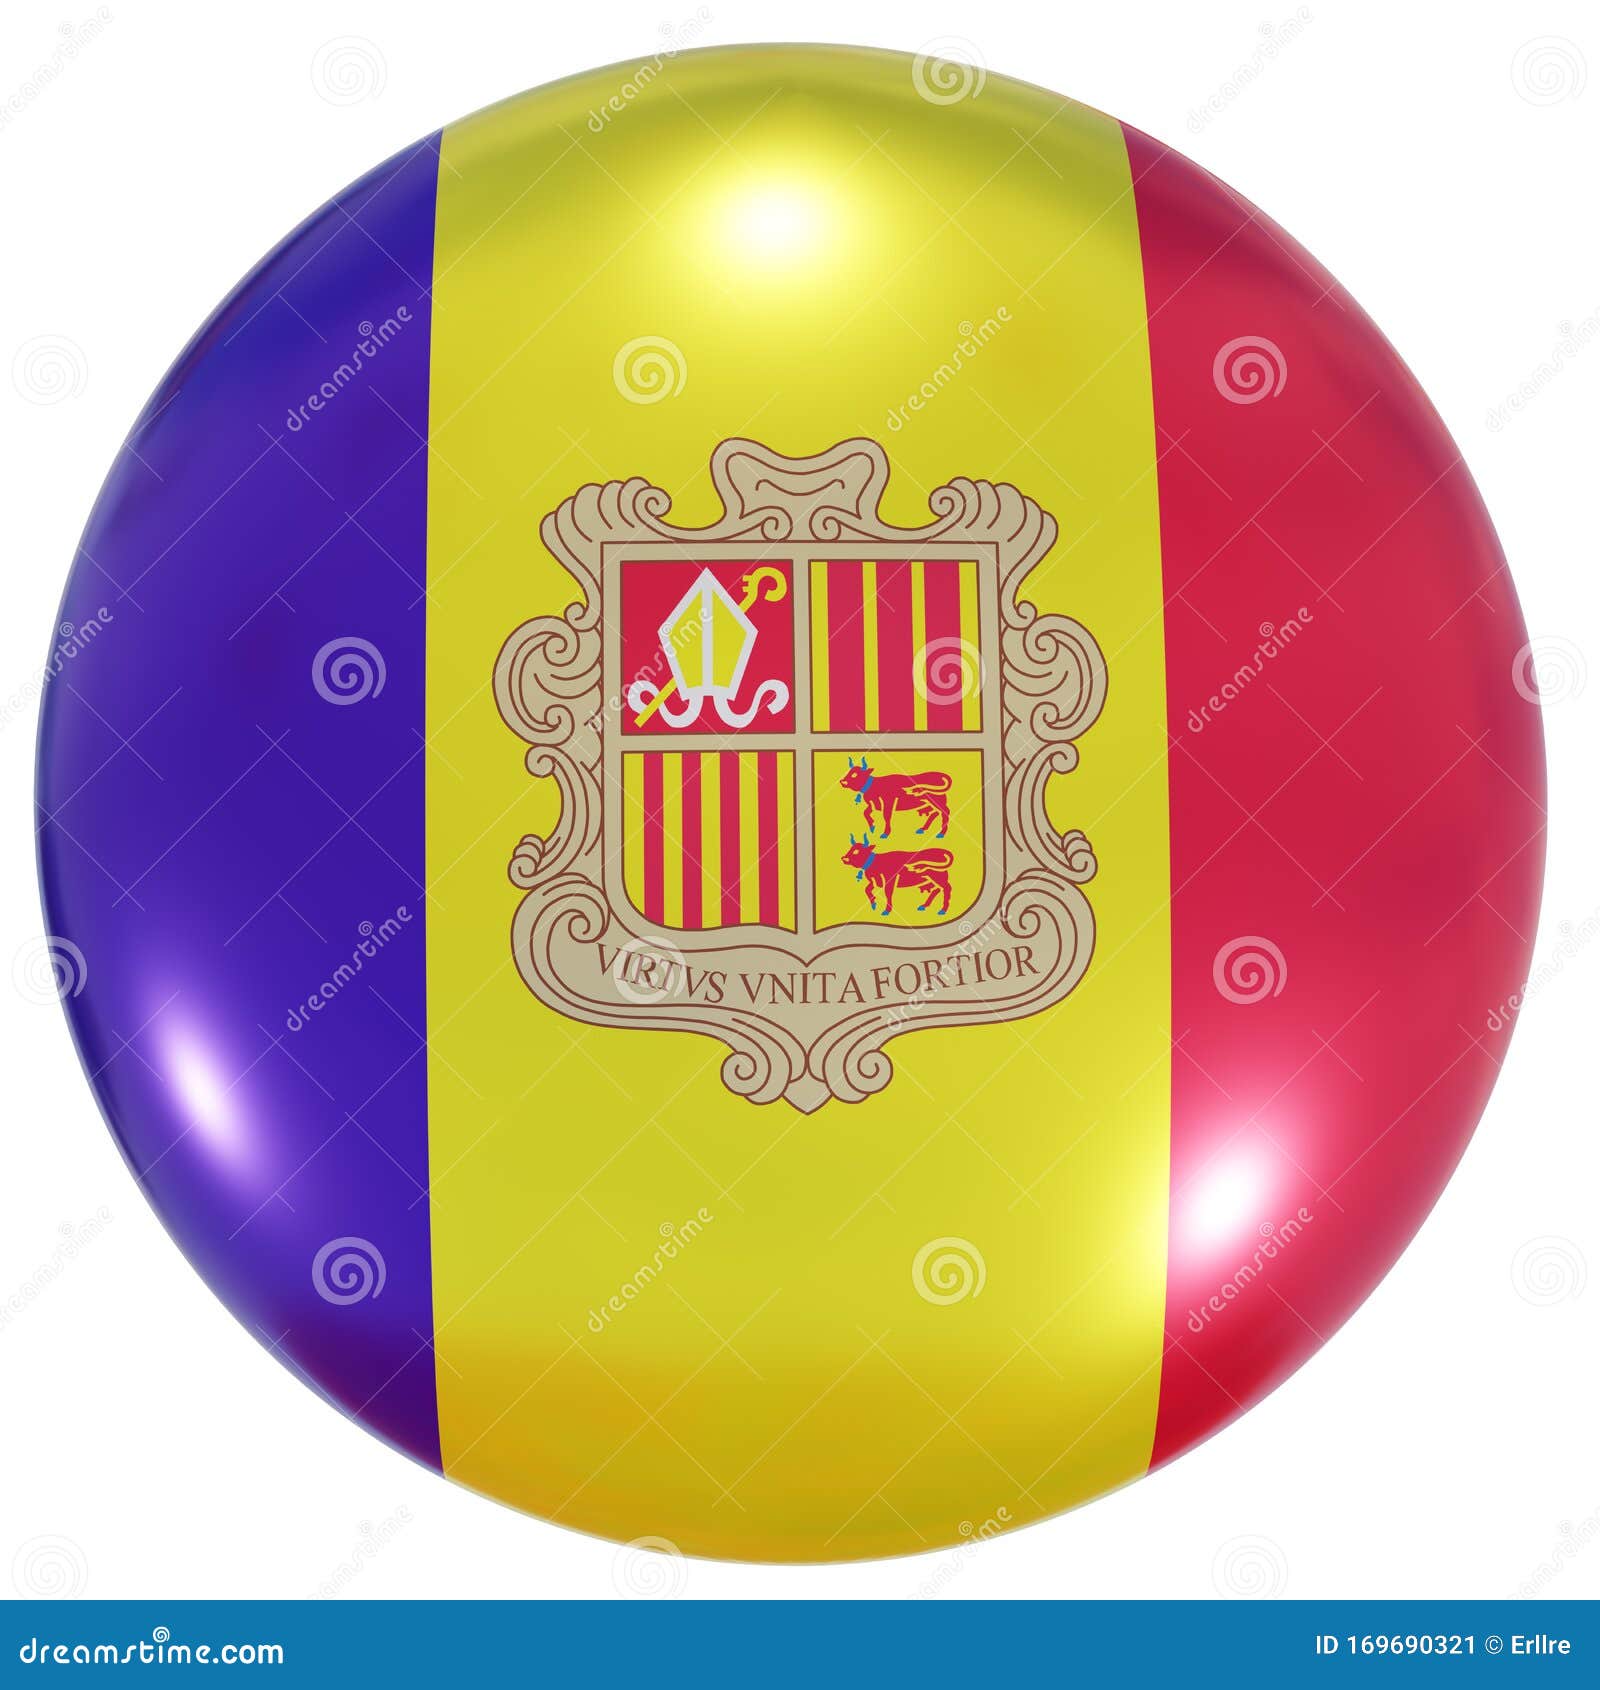 Andorra National Flag Button Stock Illustration ...